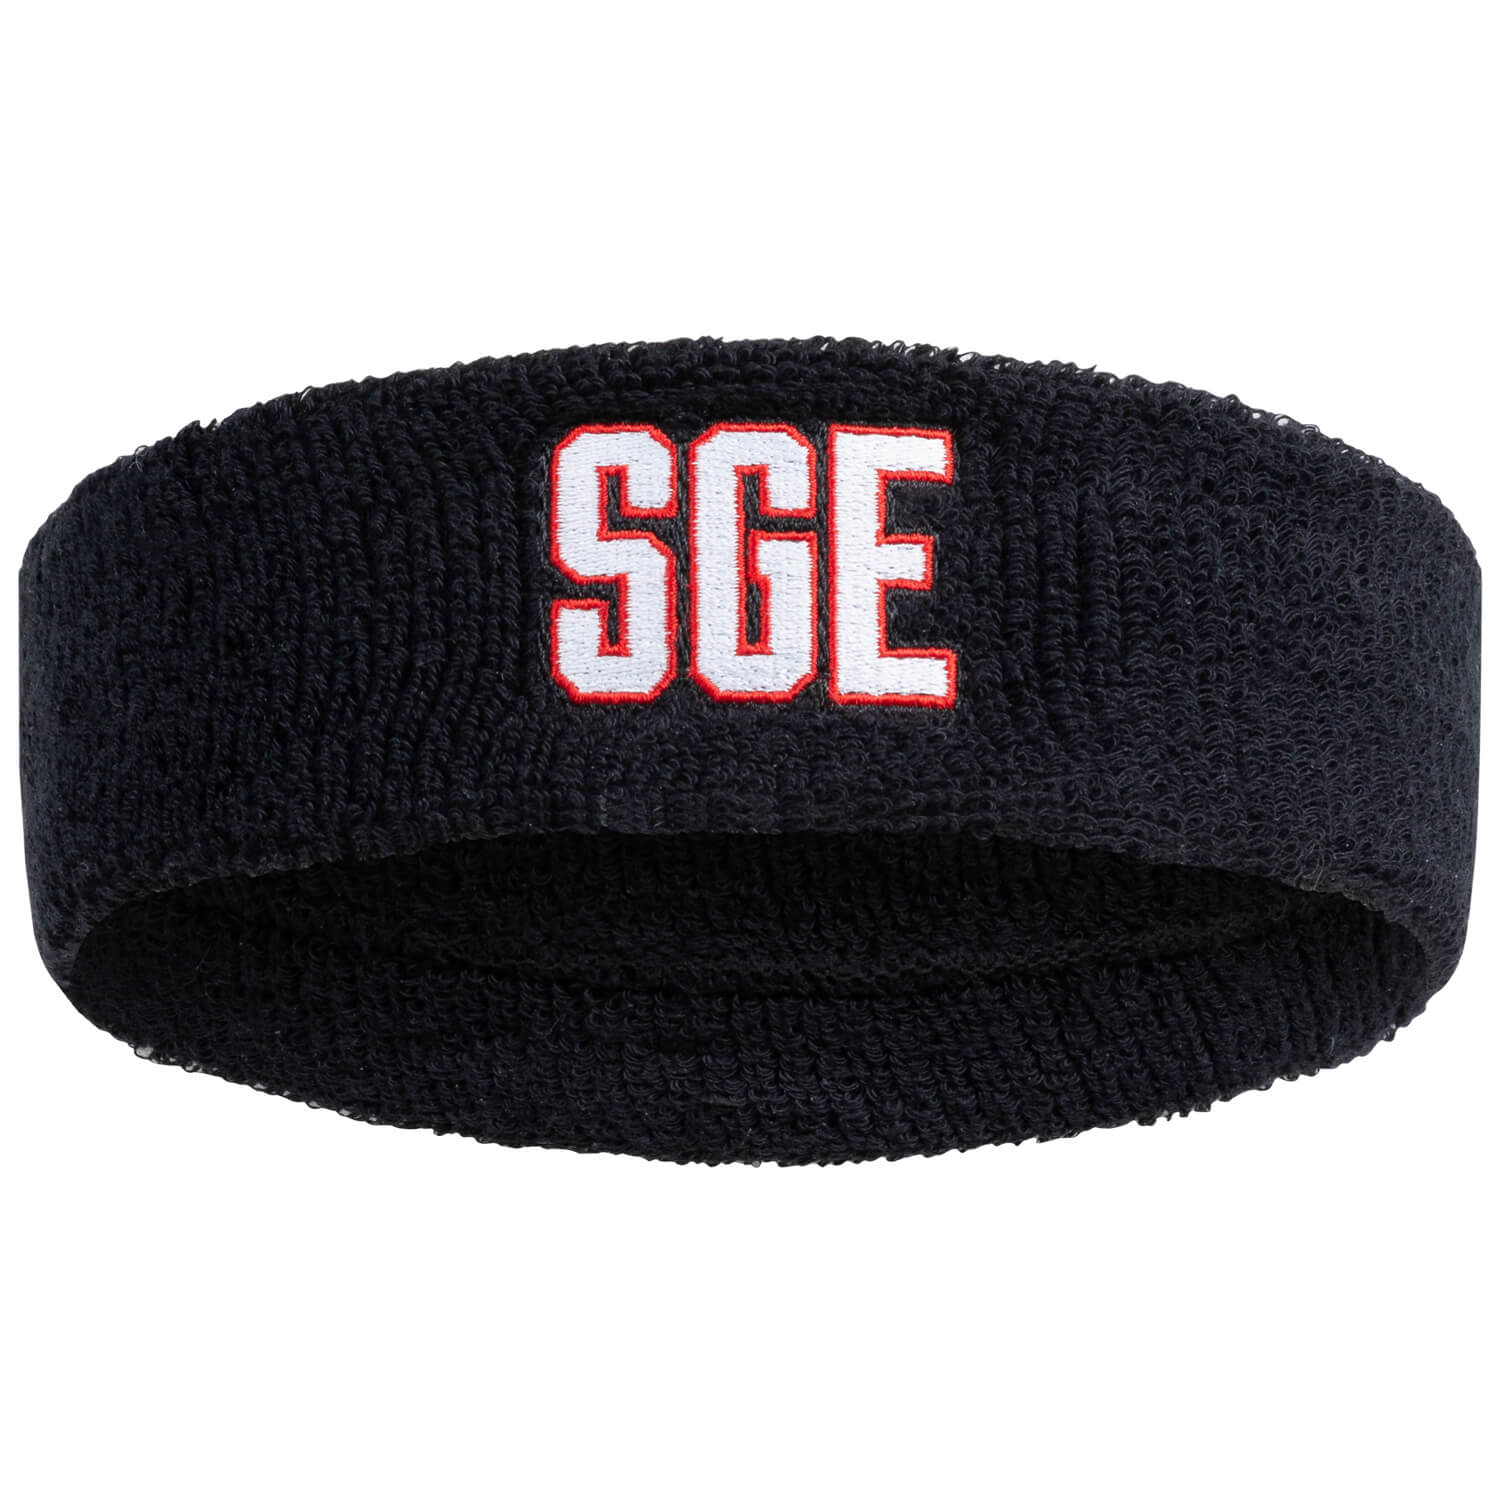 Bild 3: Headband SGE 99